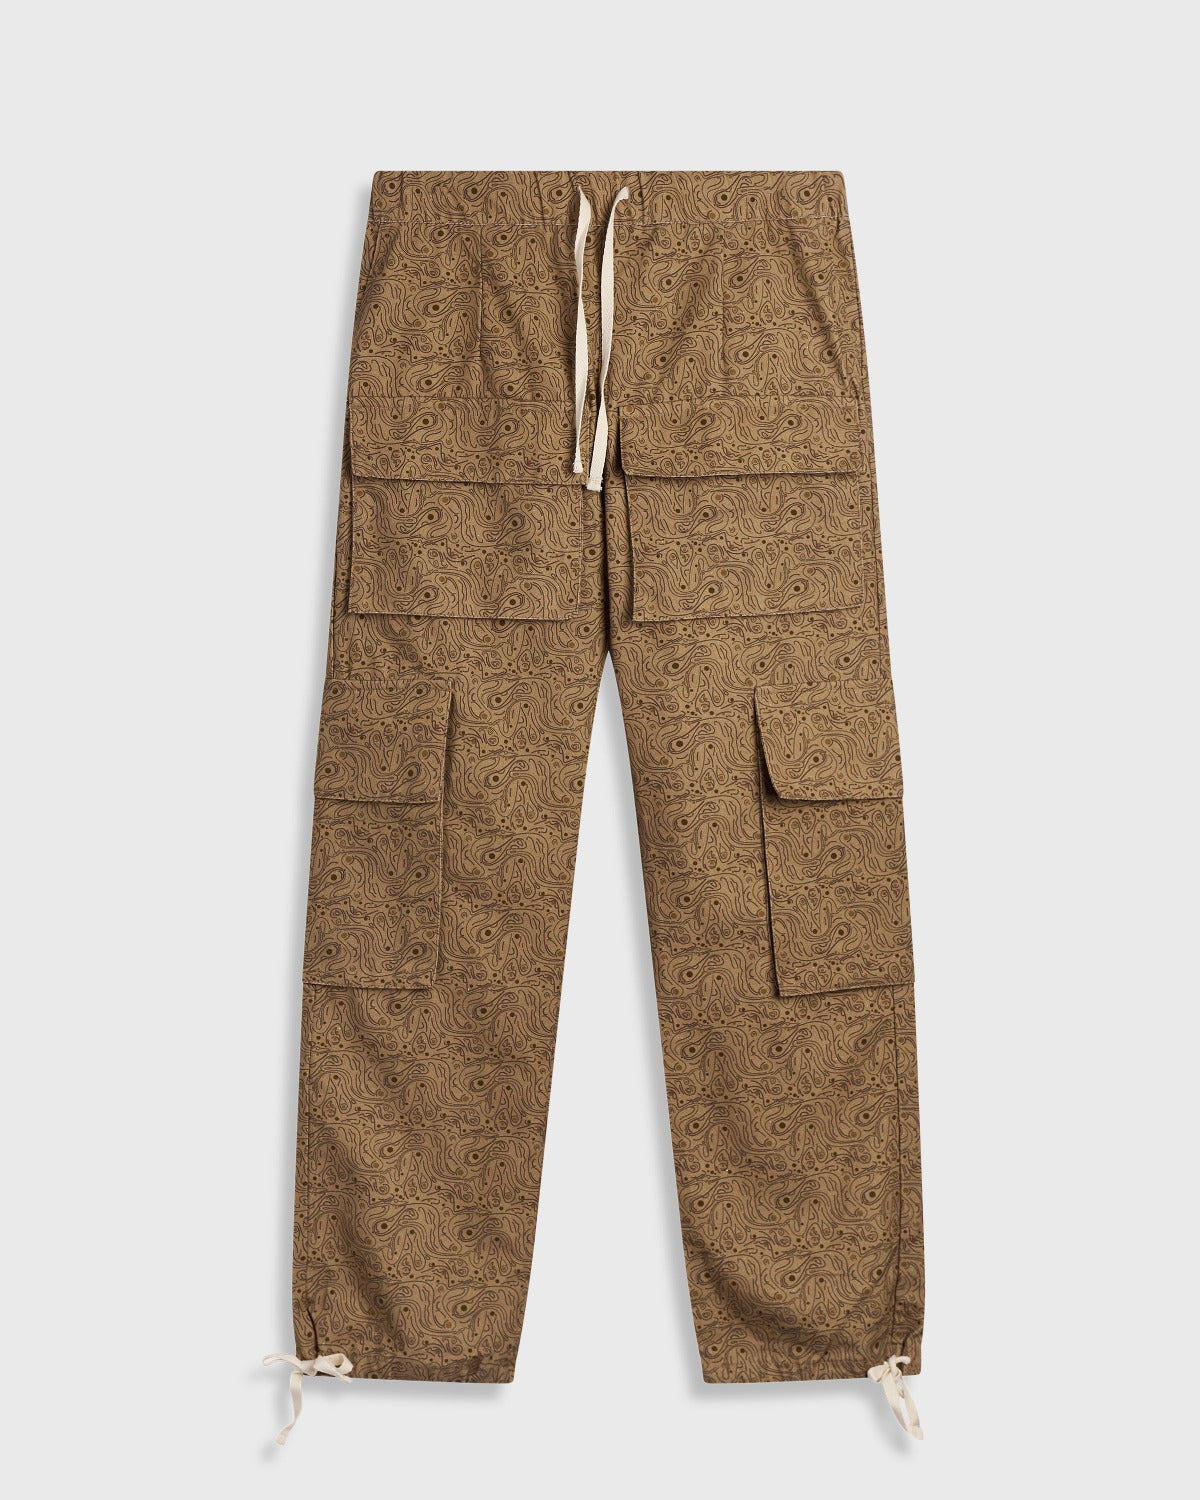 Carter's Baby Boy's Light Brown Cargo Pants Size 18M 100% Cotton | eBay